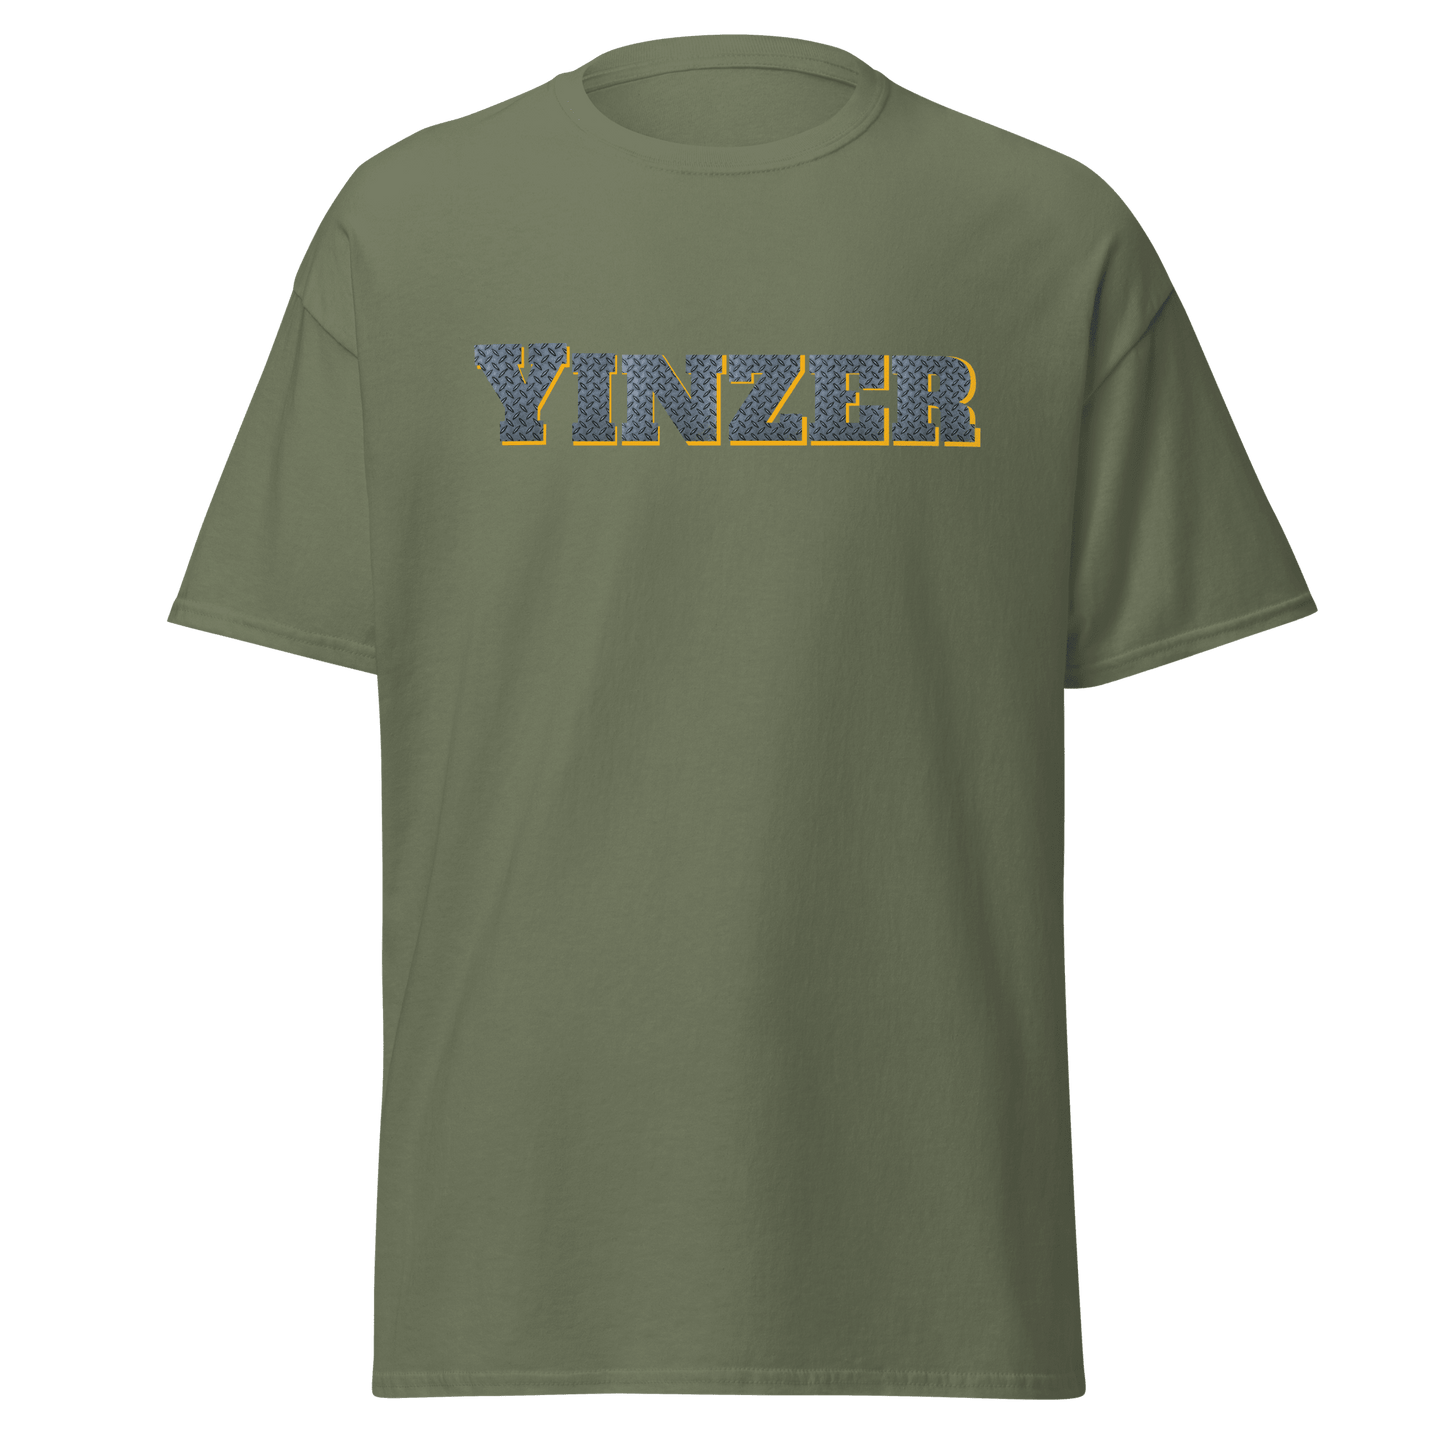 Steel Yinzer T-Shirt - Burgh Proud Yinzergear Military Green S 